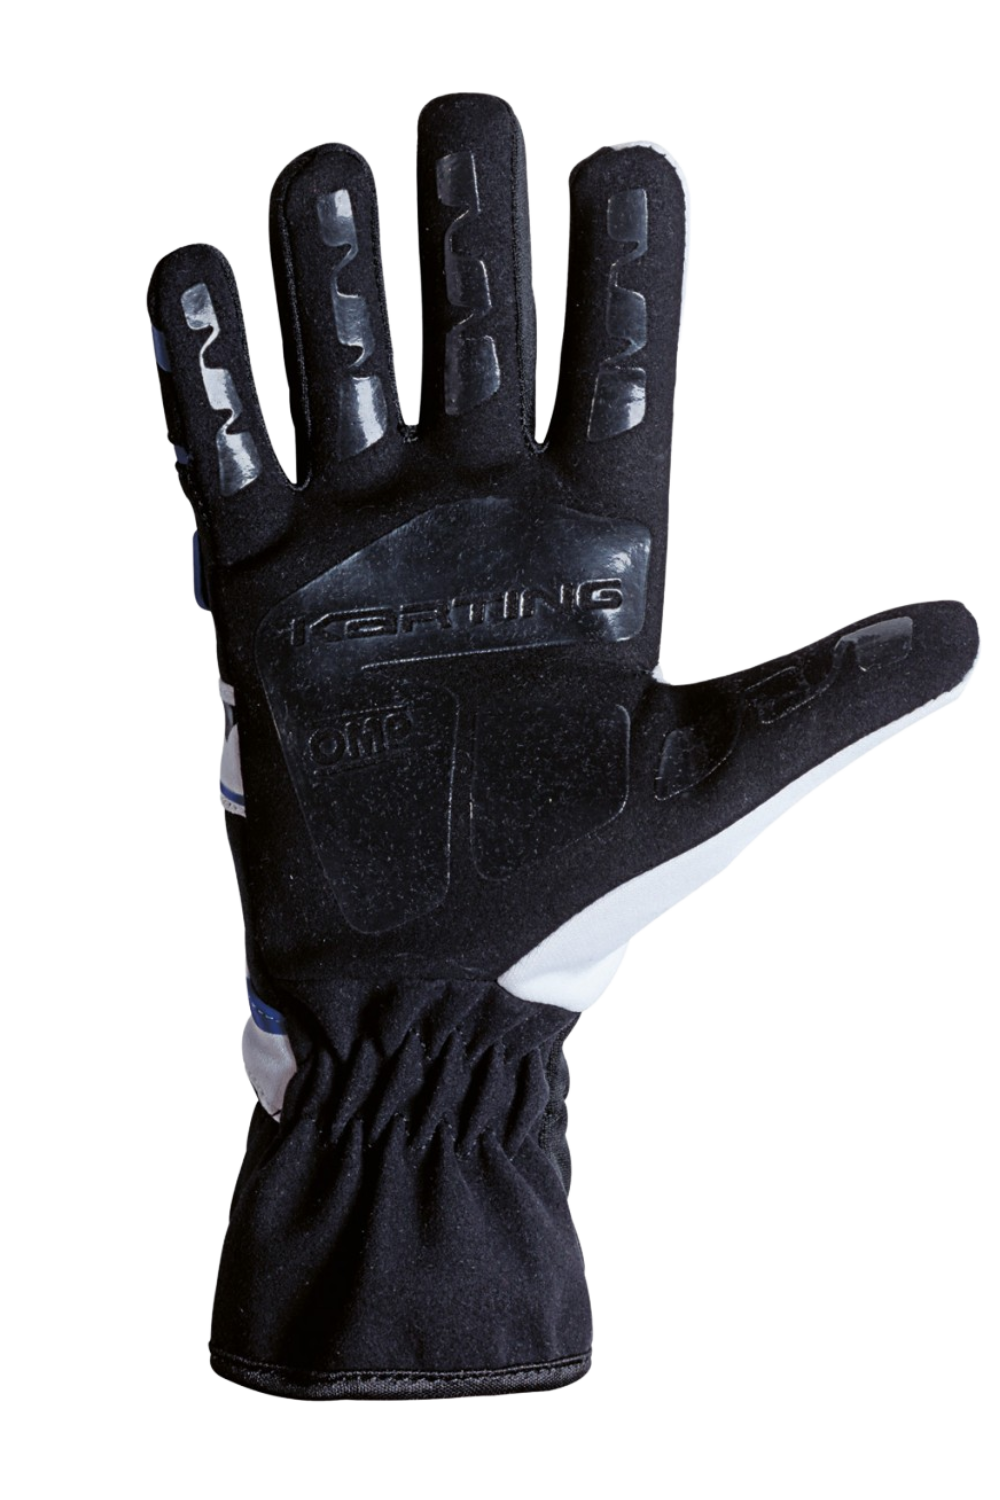 OMP KS-3 Handschuhe Schwarz/Blau/Weiß